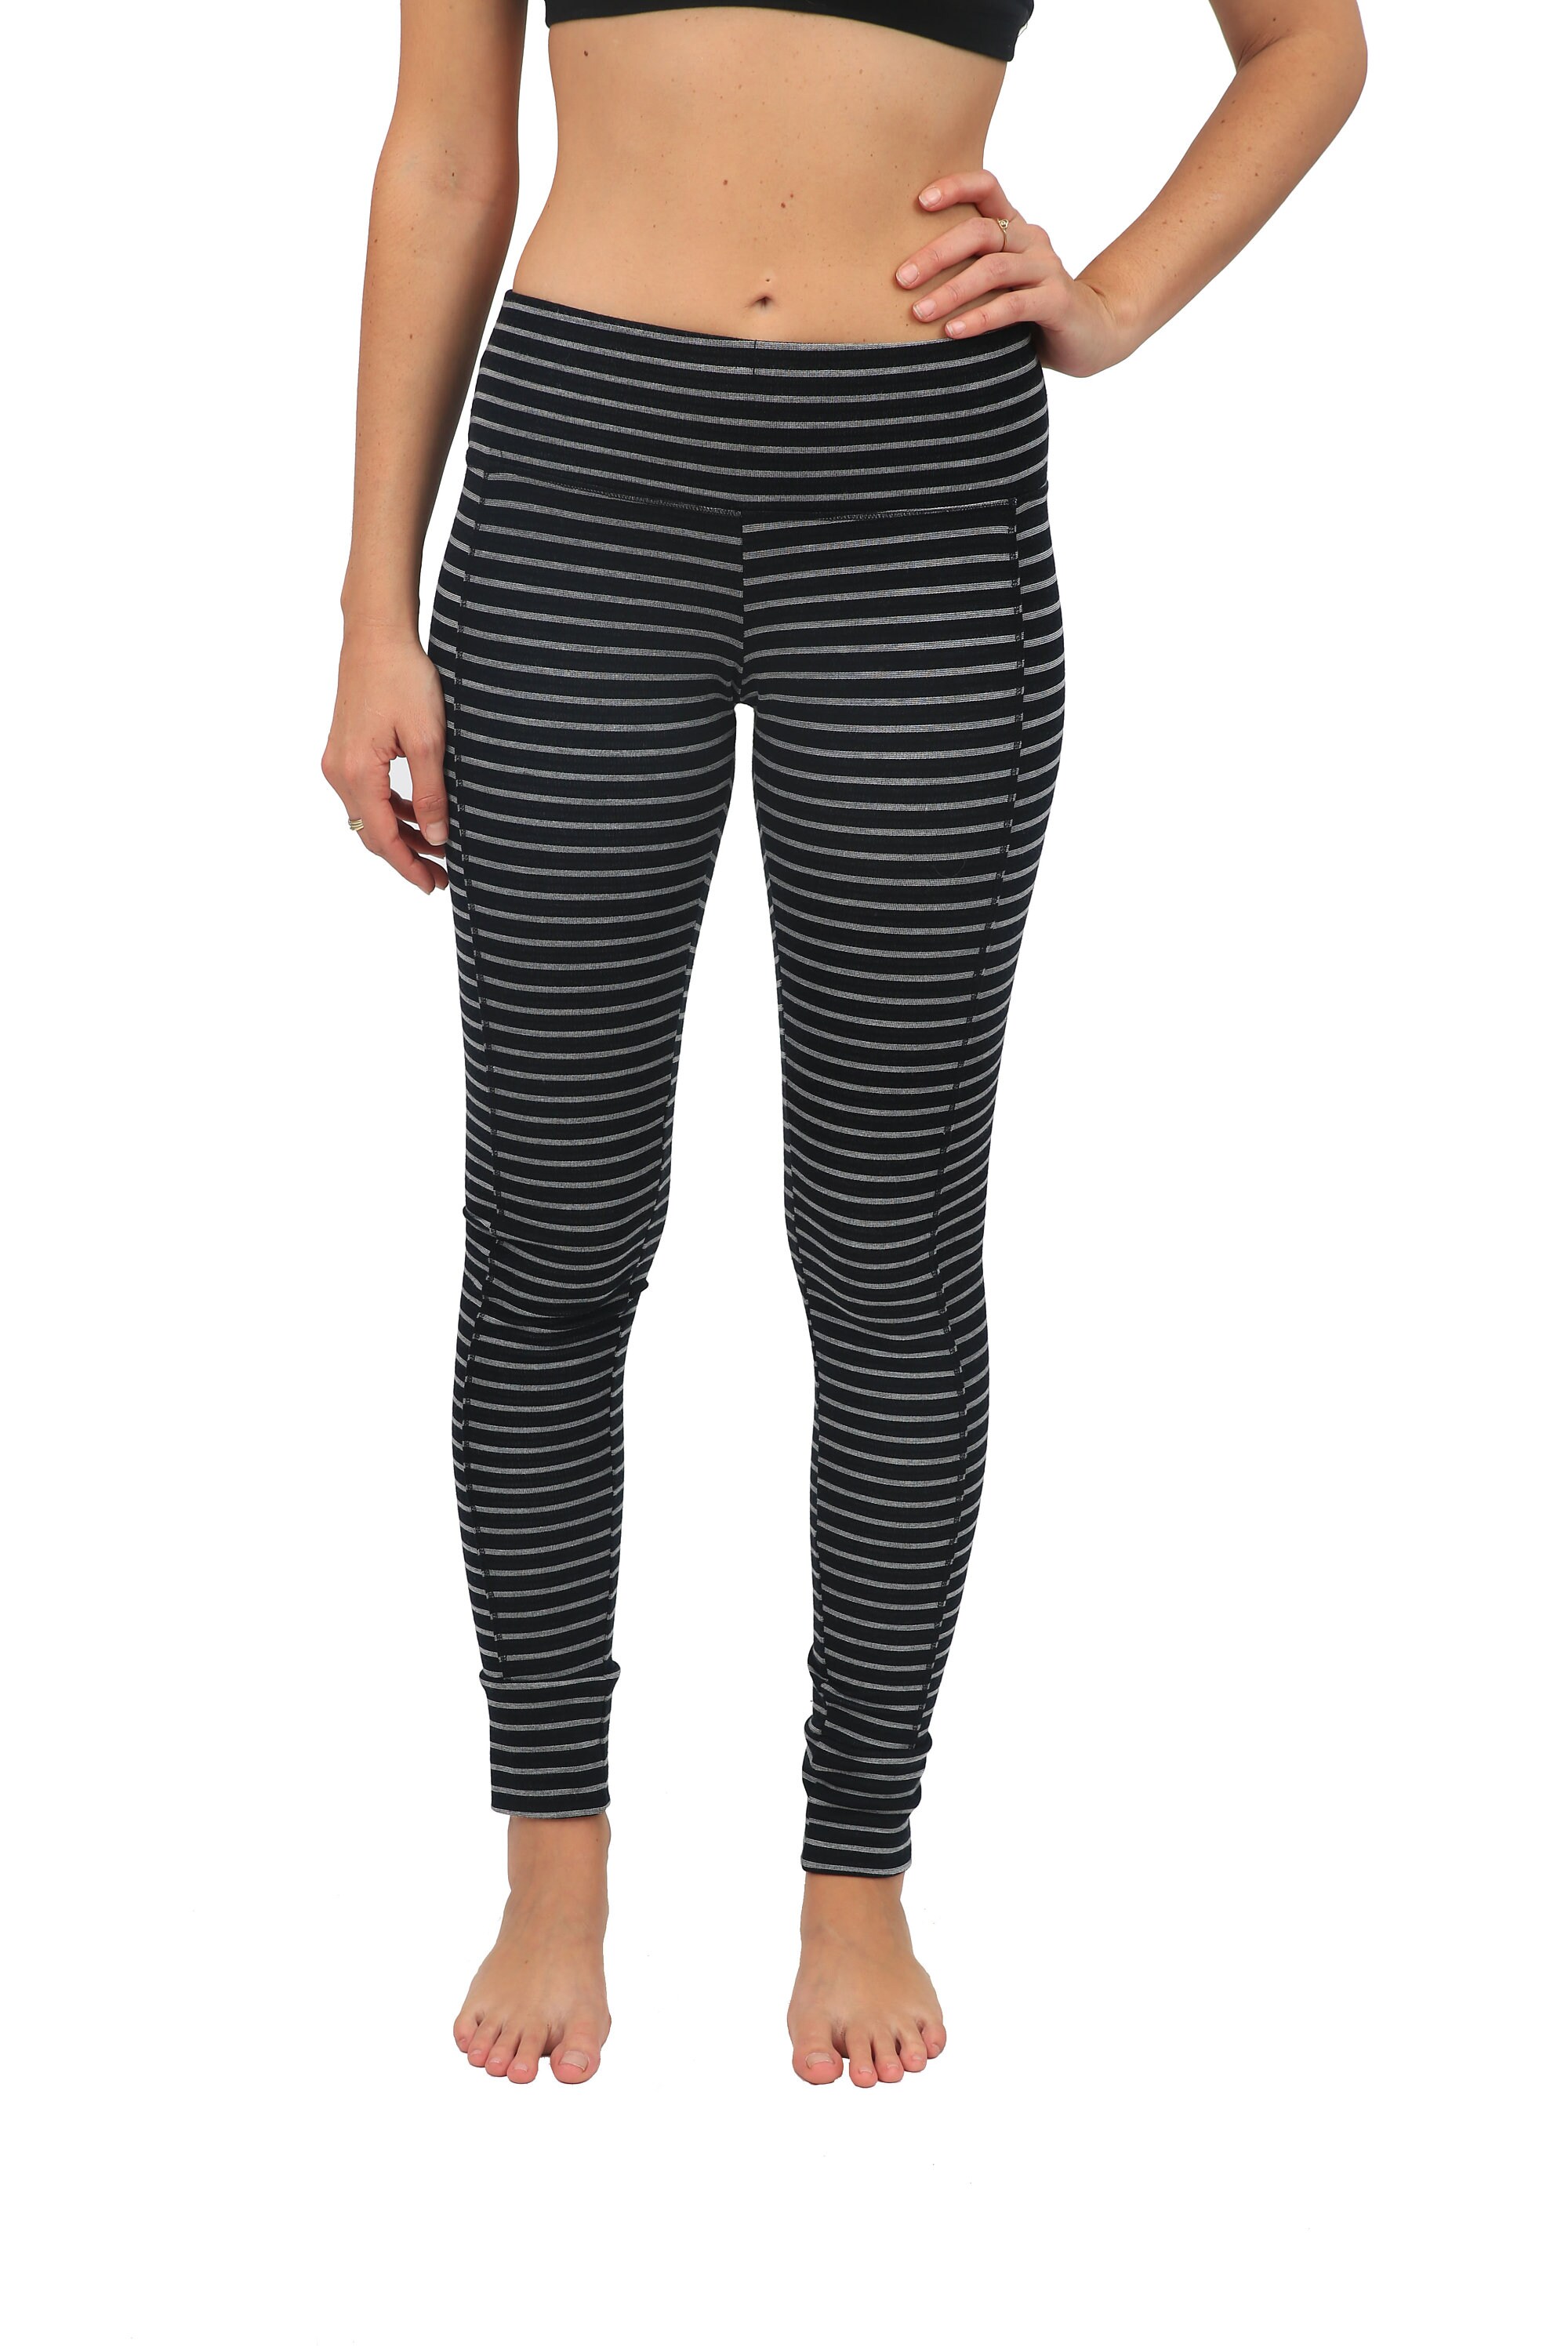 Black and Grey Striped Leggings, Yoga Pants for Women - Etsy